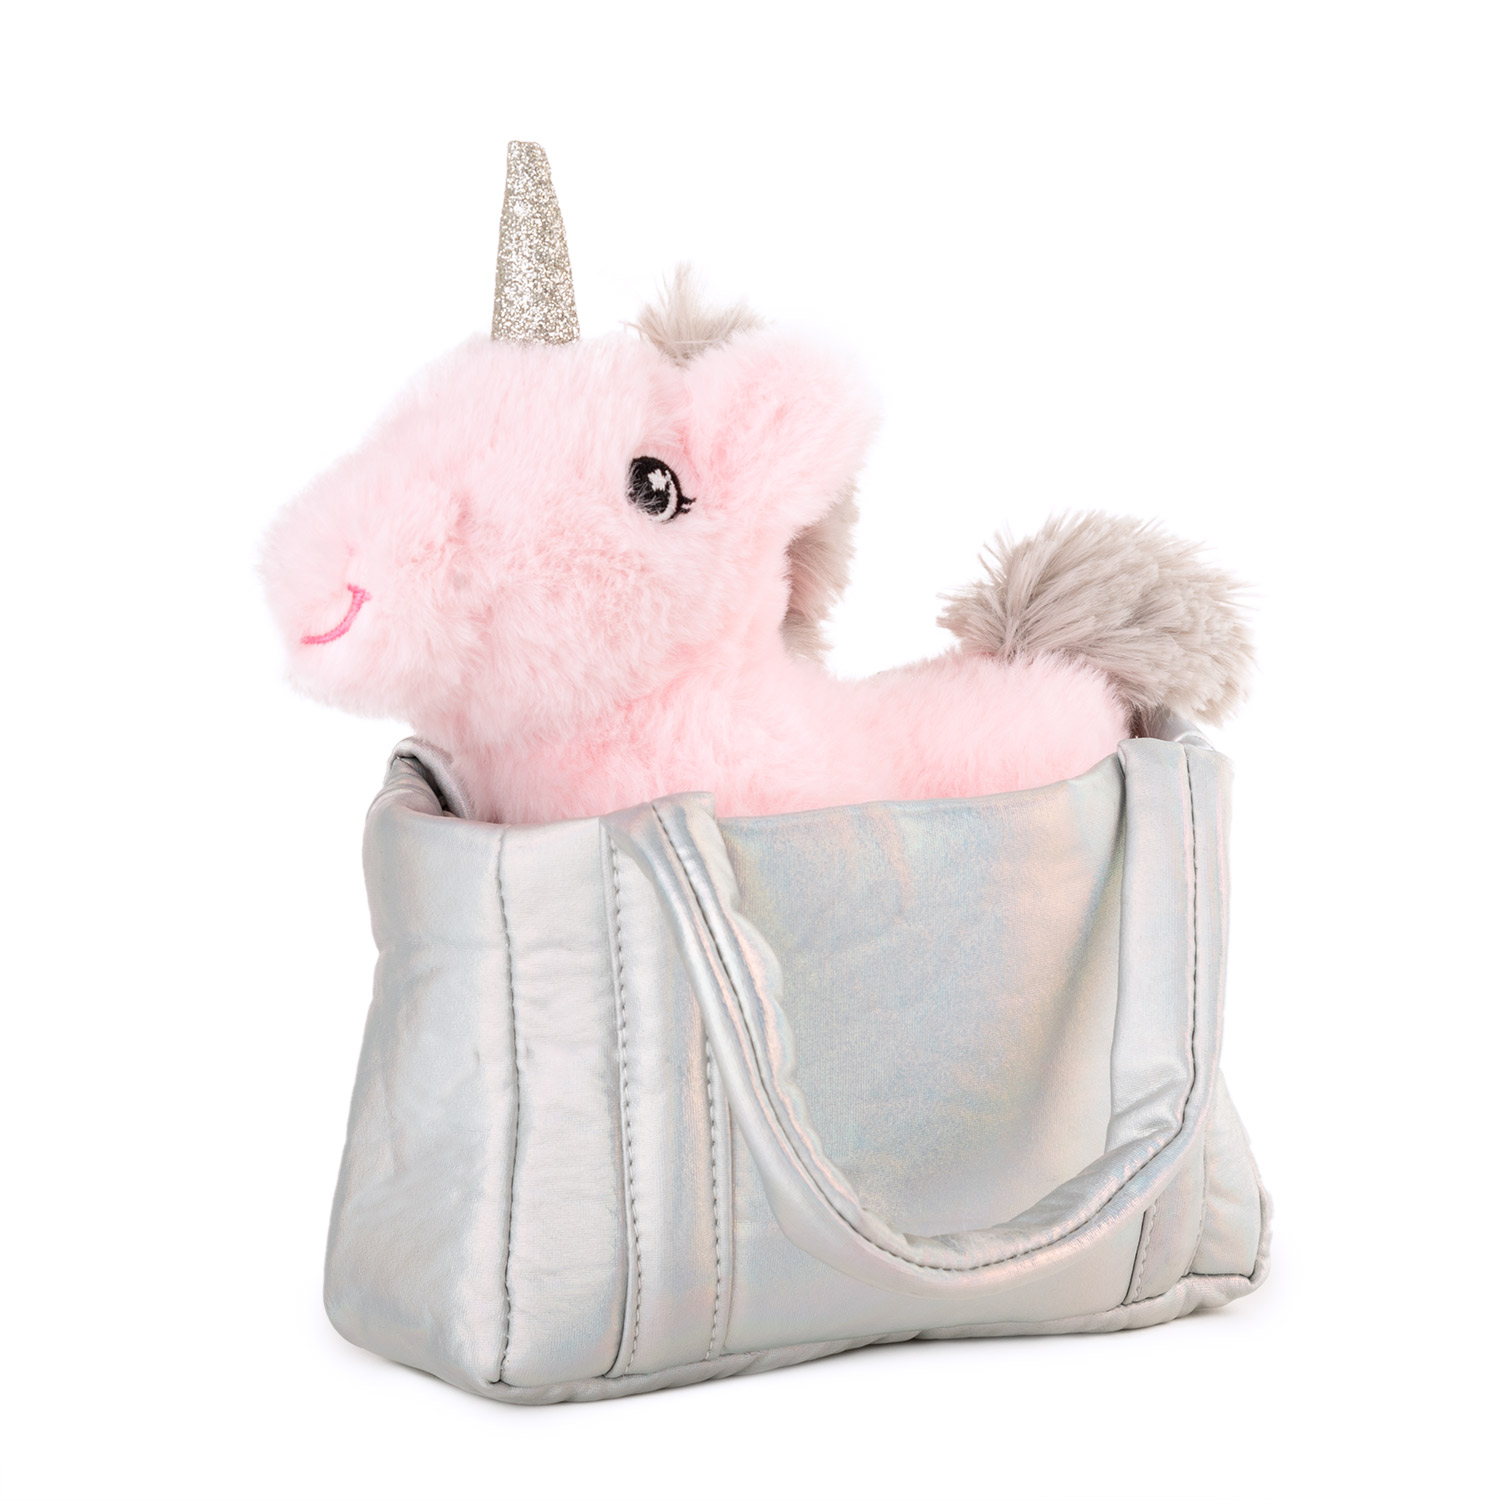 Unicorn in grey bag